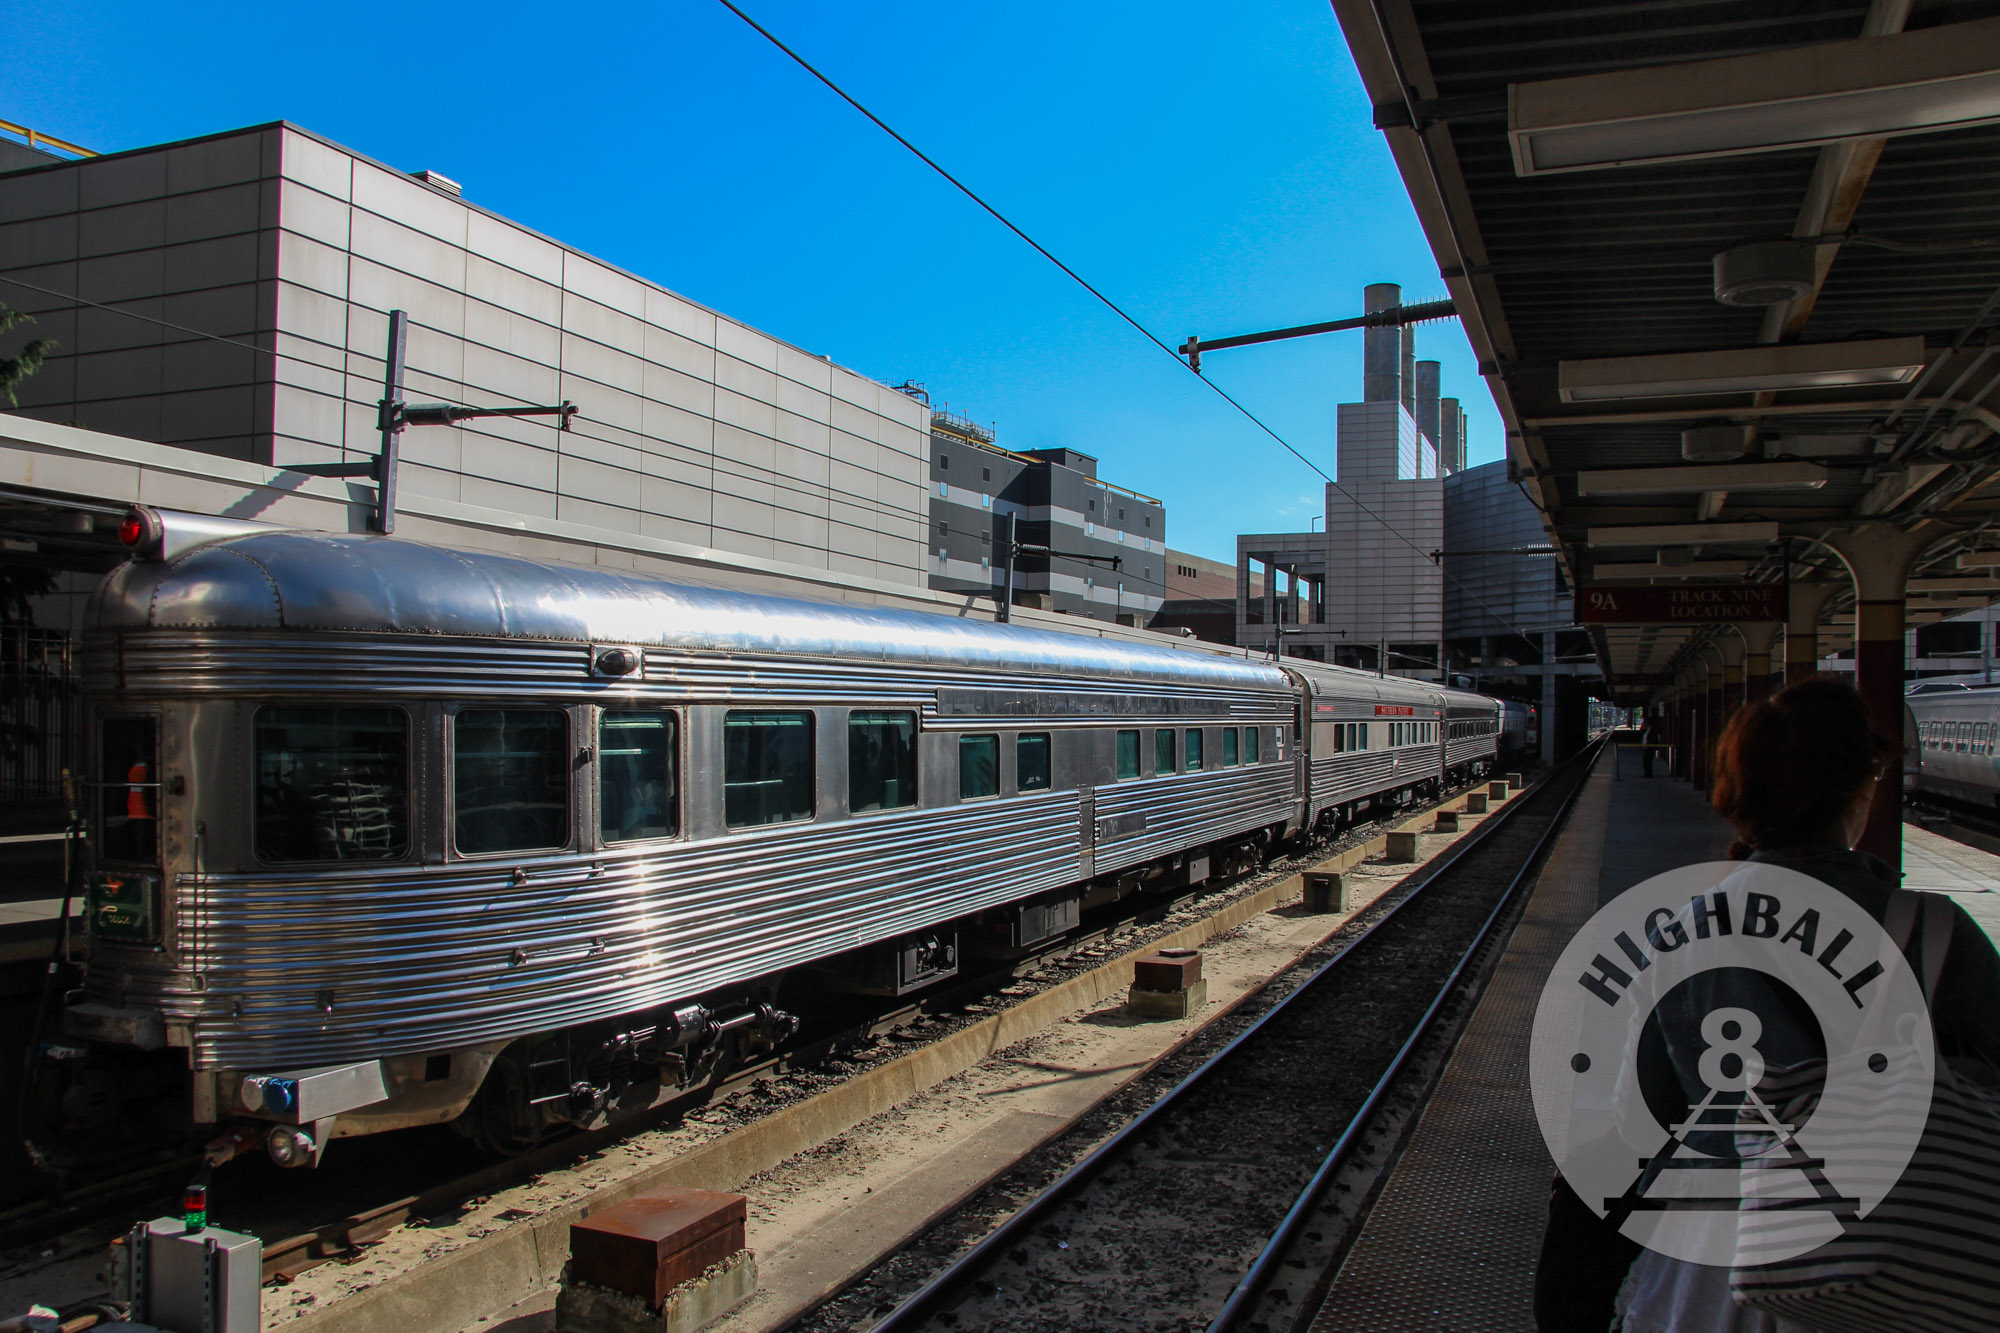 Vintage passenger rail cars at Boston South Station, Boston, Massachusetts, USA, 2014.